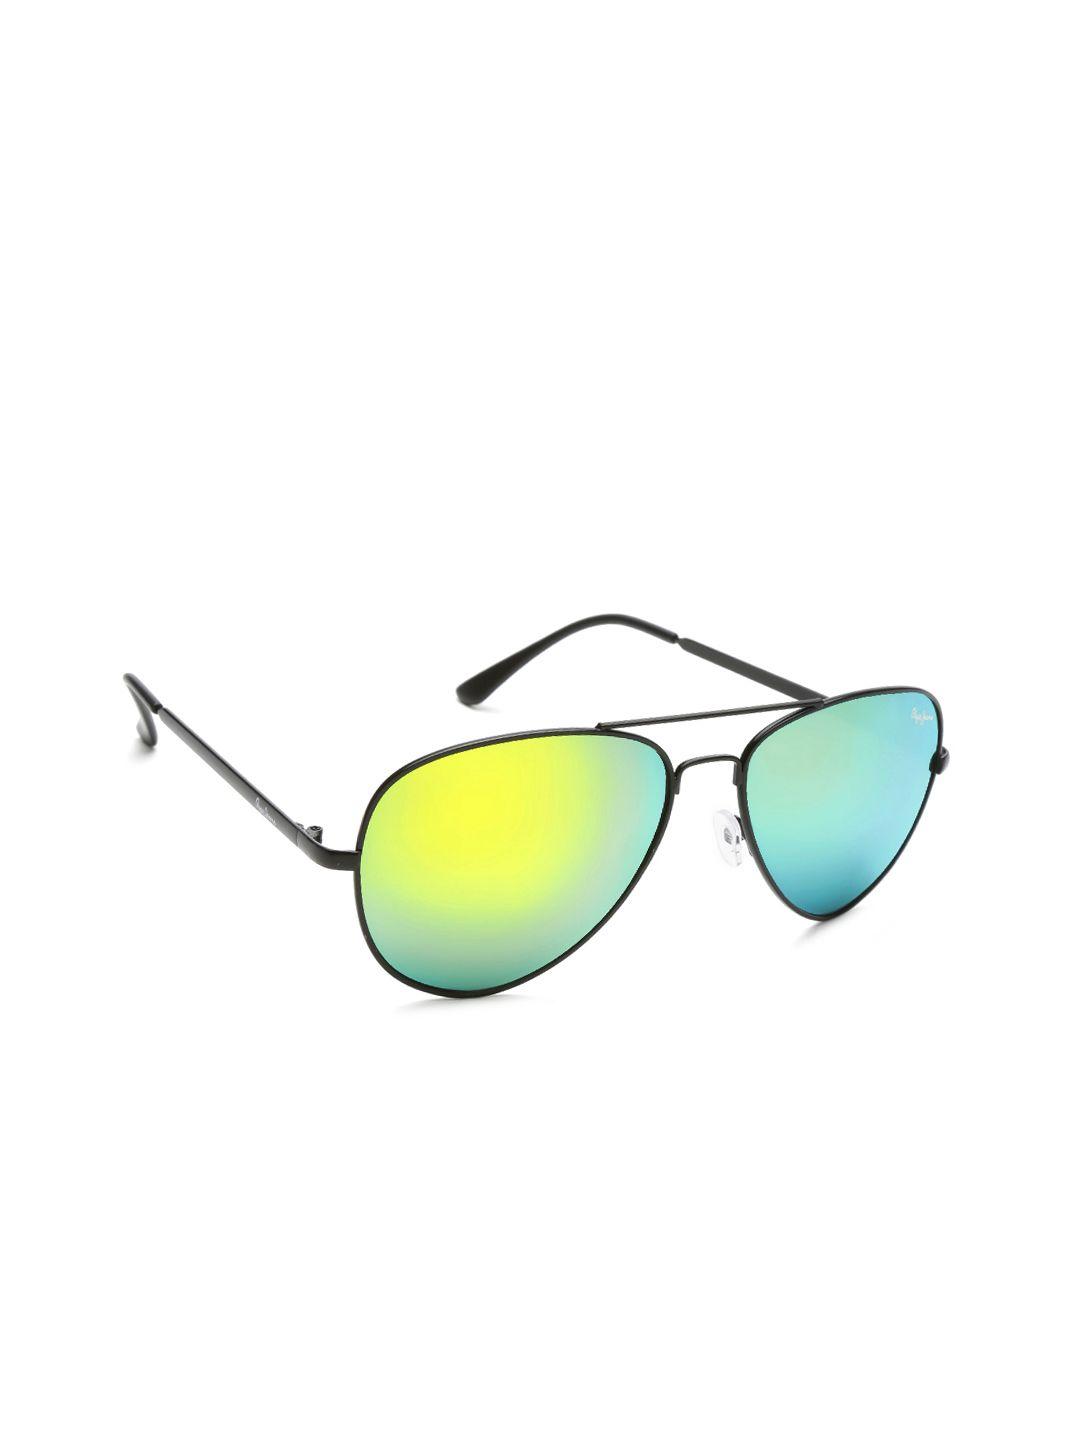 pepe jeans unisex mirrored aviator sunglasses pj5111c4